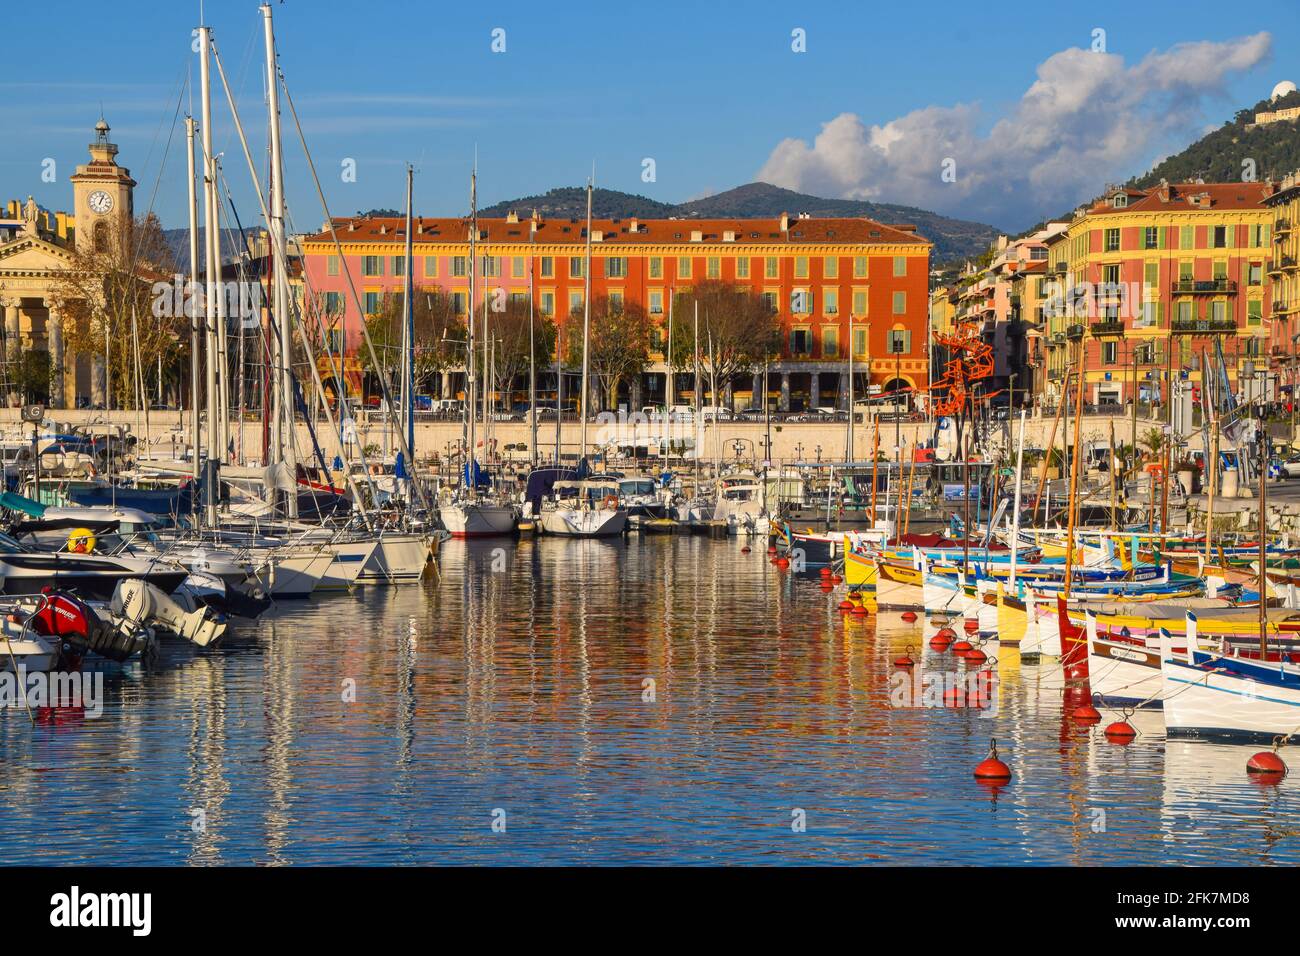 Port Lympia, Nice, South of France Stock Photo - Alamy